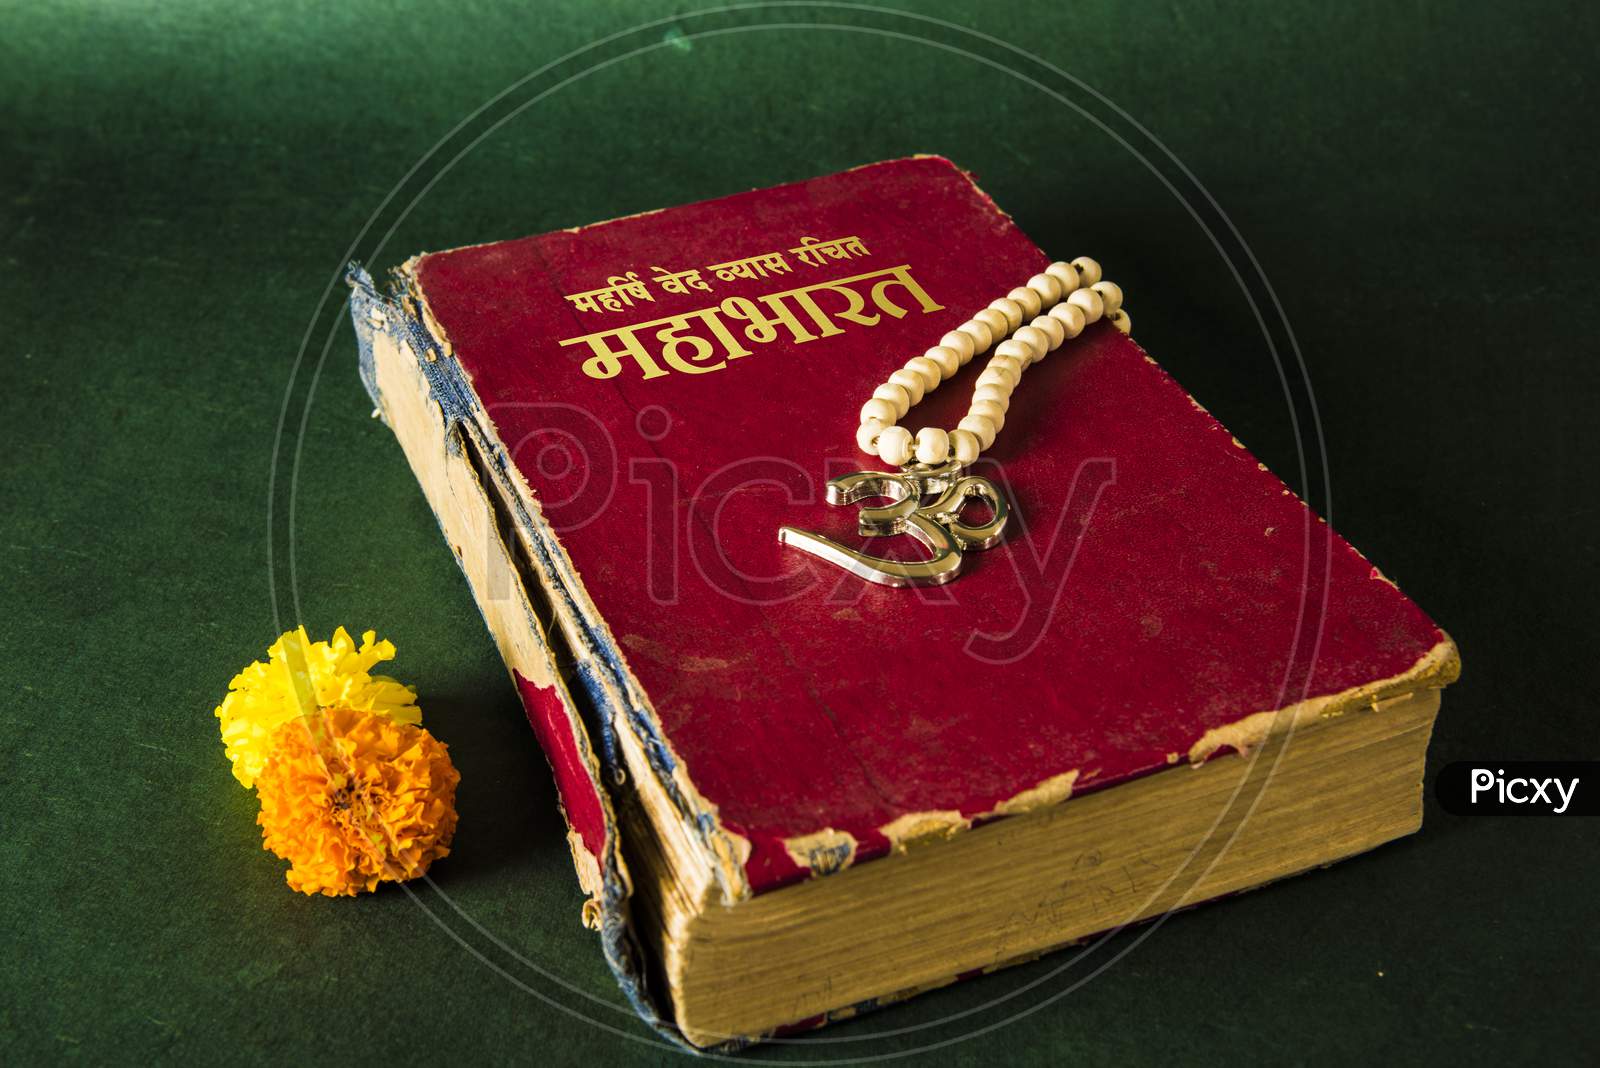 Indian ancient literature bhagwad Gita, ramayana and mahabharat book